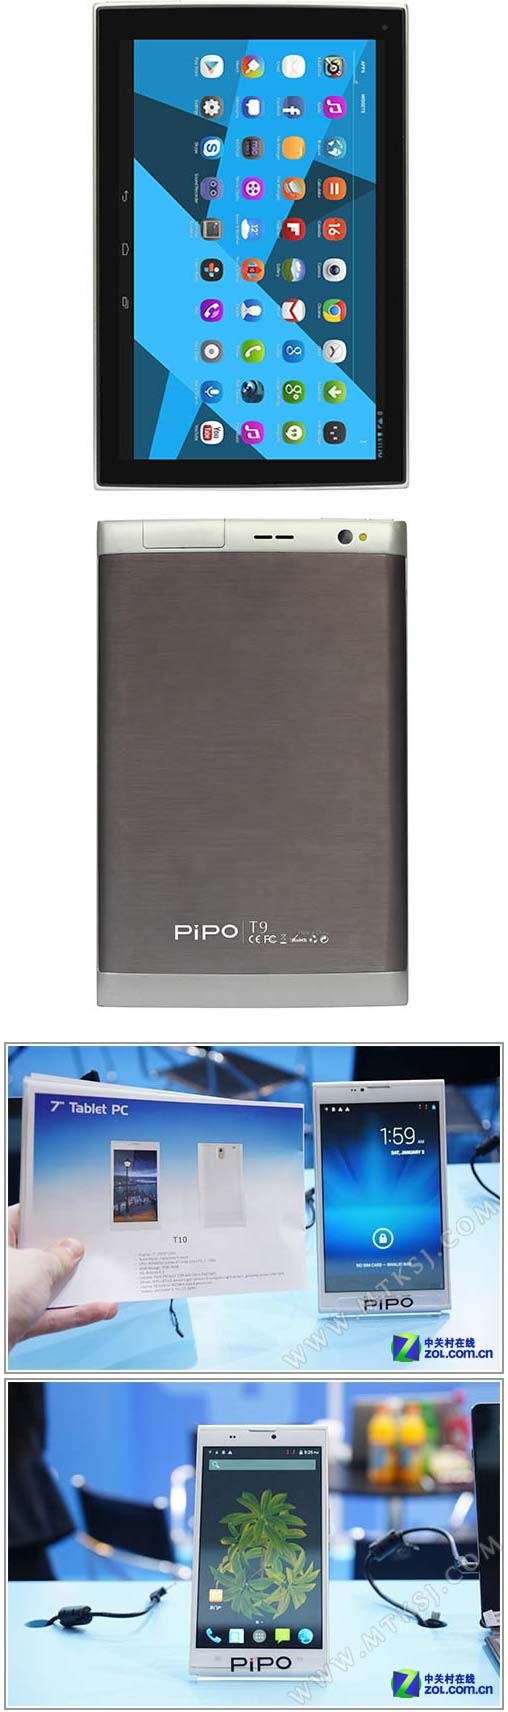 На фото показаны планшеты PIPO Titanium T9, T8 и T10